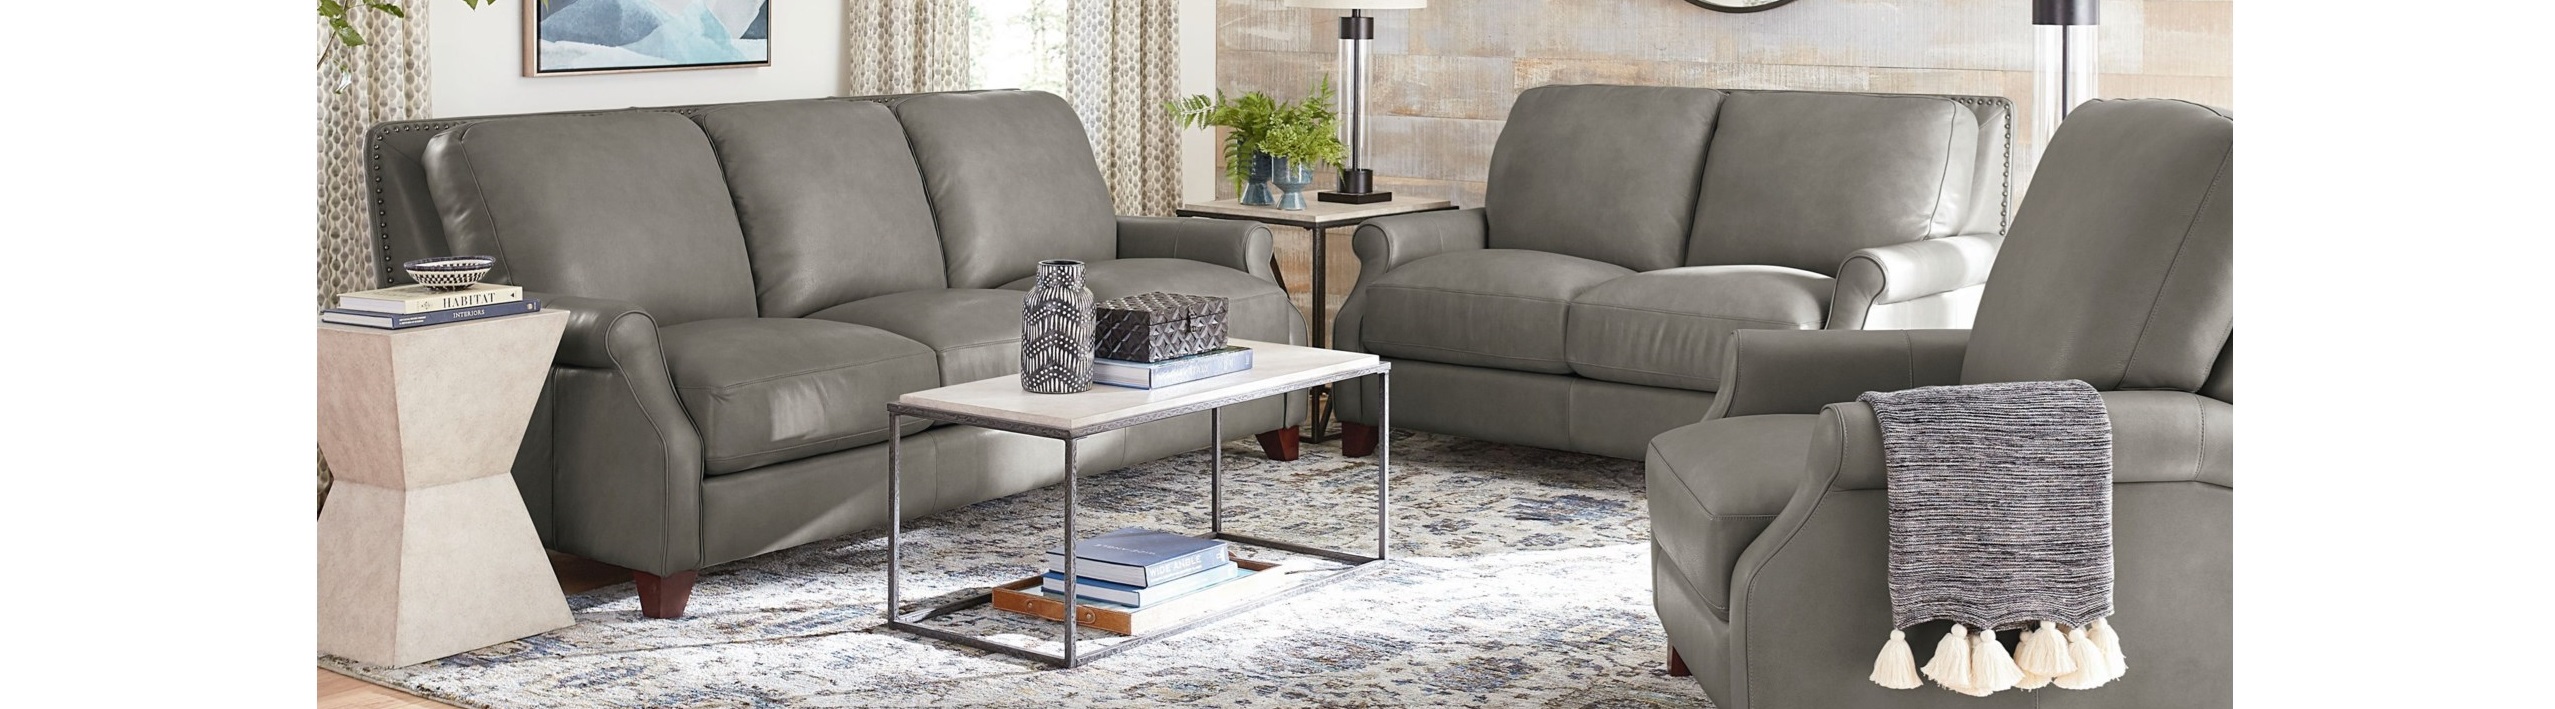 Crowley Furniture & Mattress Overland Park reviews | 6821 West 135th Street - Overland Park KS